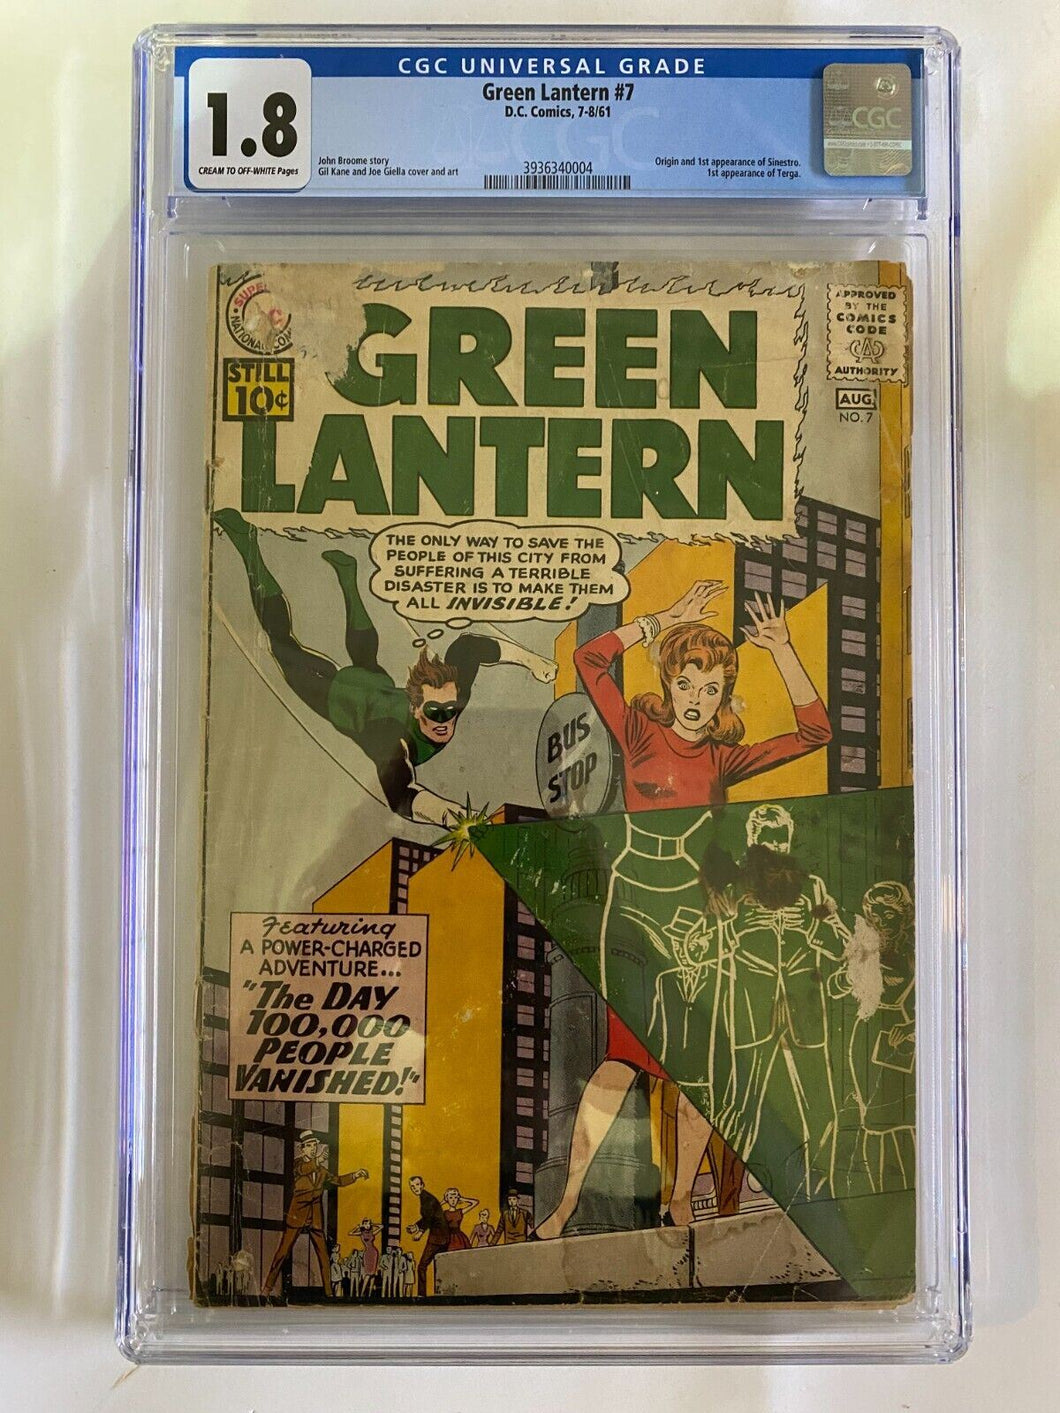 1961 DC Comics Green Lantern Vol 2 Issue 7 1.8 CGC Universal Graded